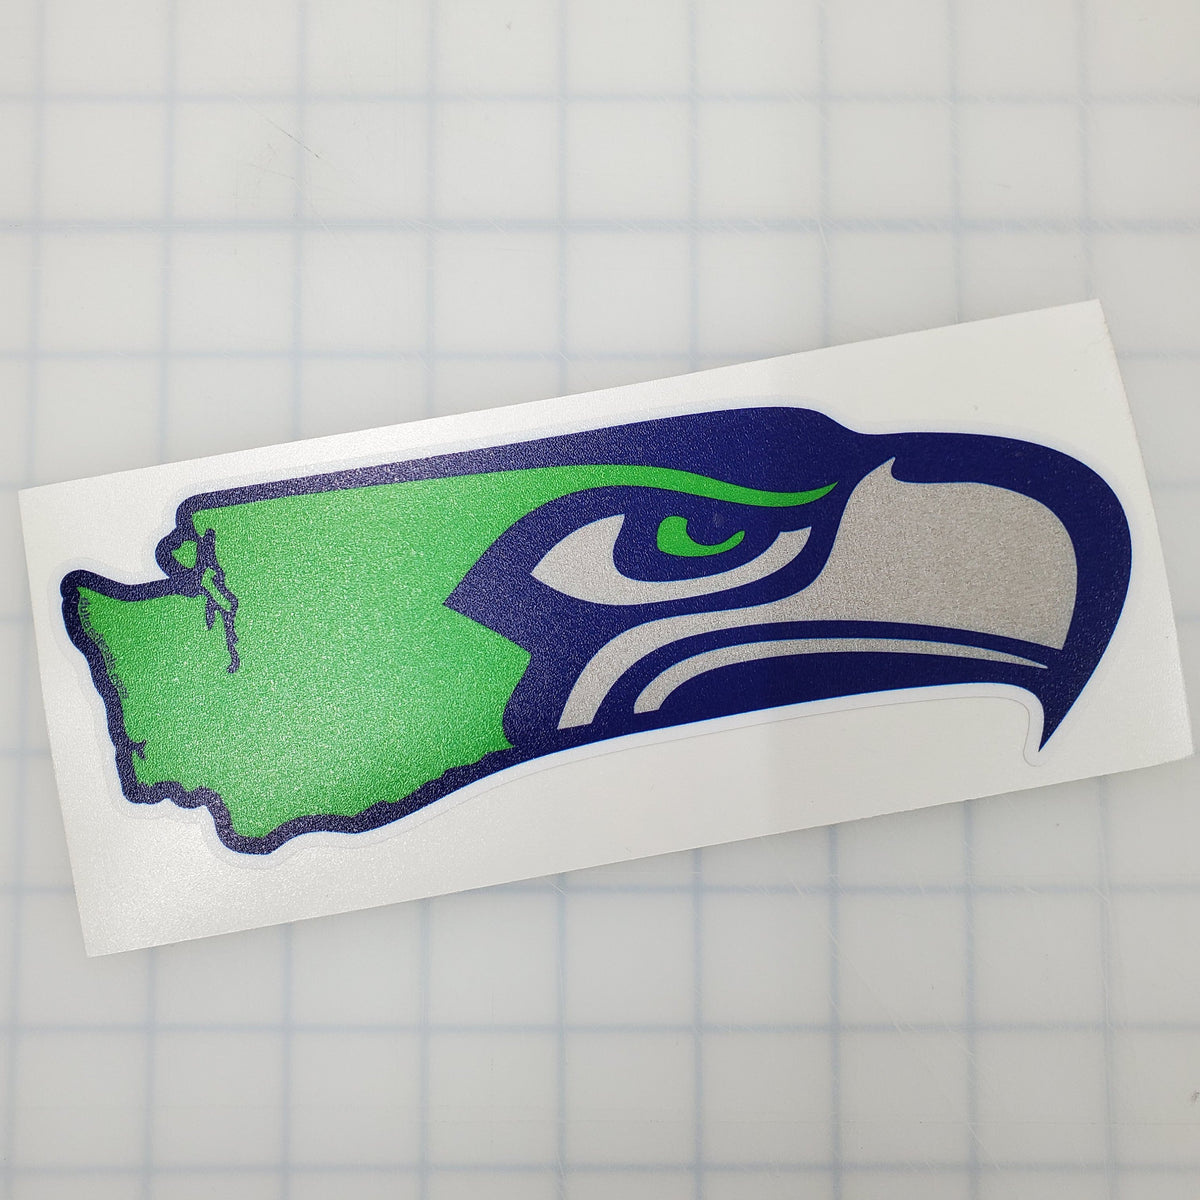 Local Seattle artist creates an amazing Seahawks logo, drawing on